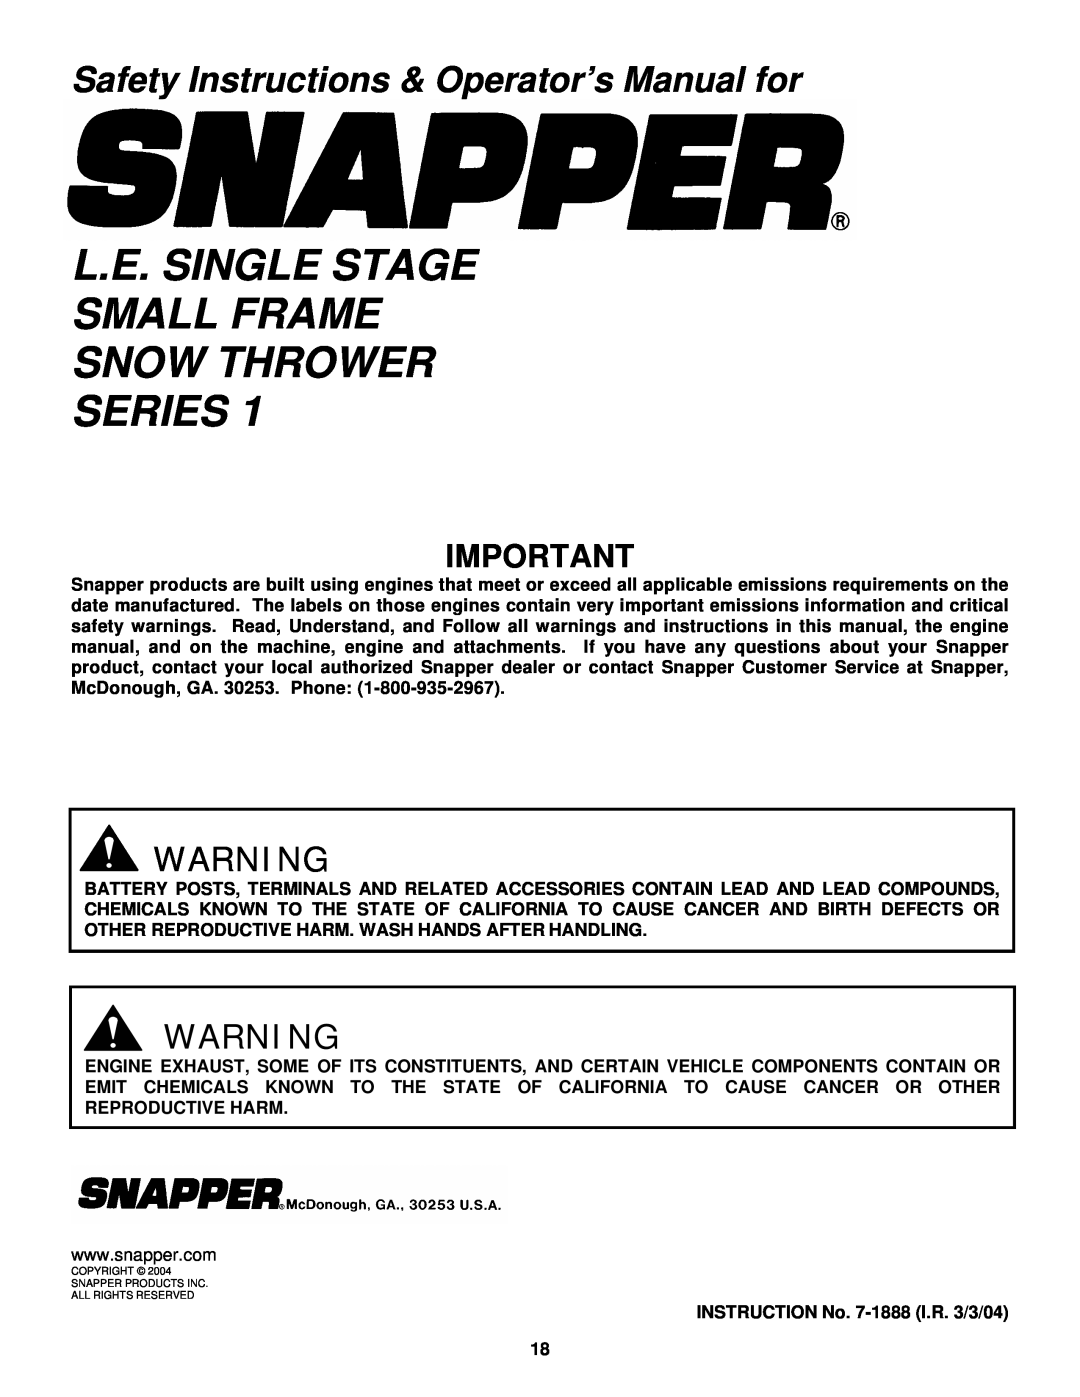 Snapper LE3171R, LE3191R, LE3191E L.E. Single Stage Small Frame Snow Thrower Series, INSTRUCTION No. 7-1888I.R. 3/3/04 